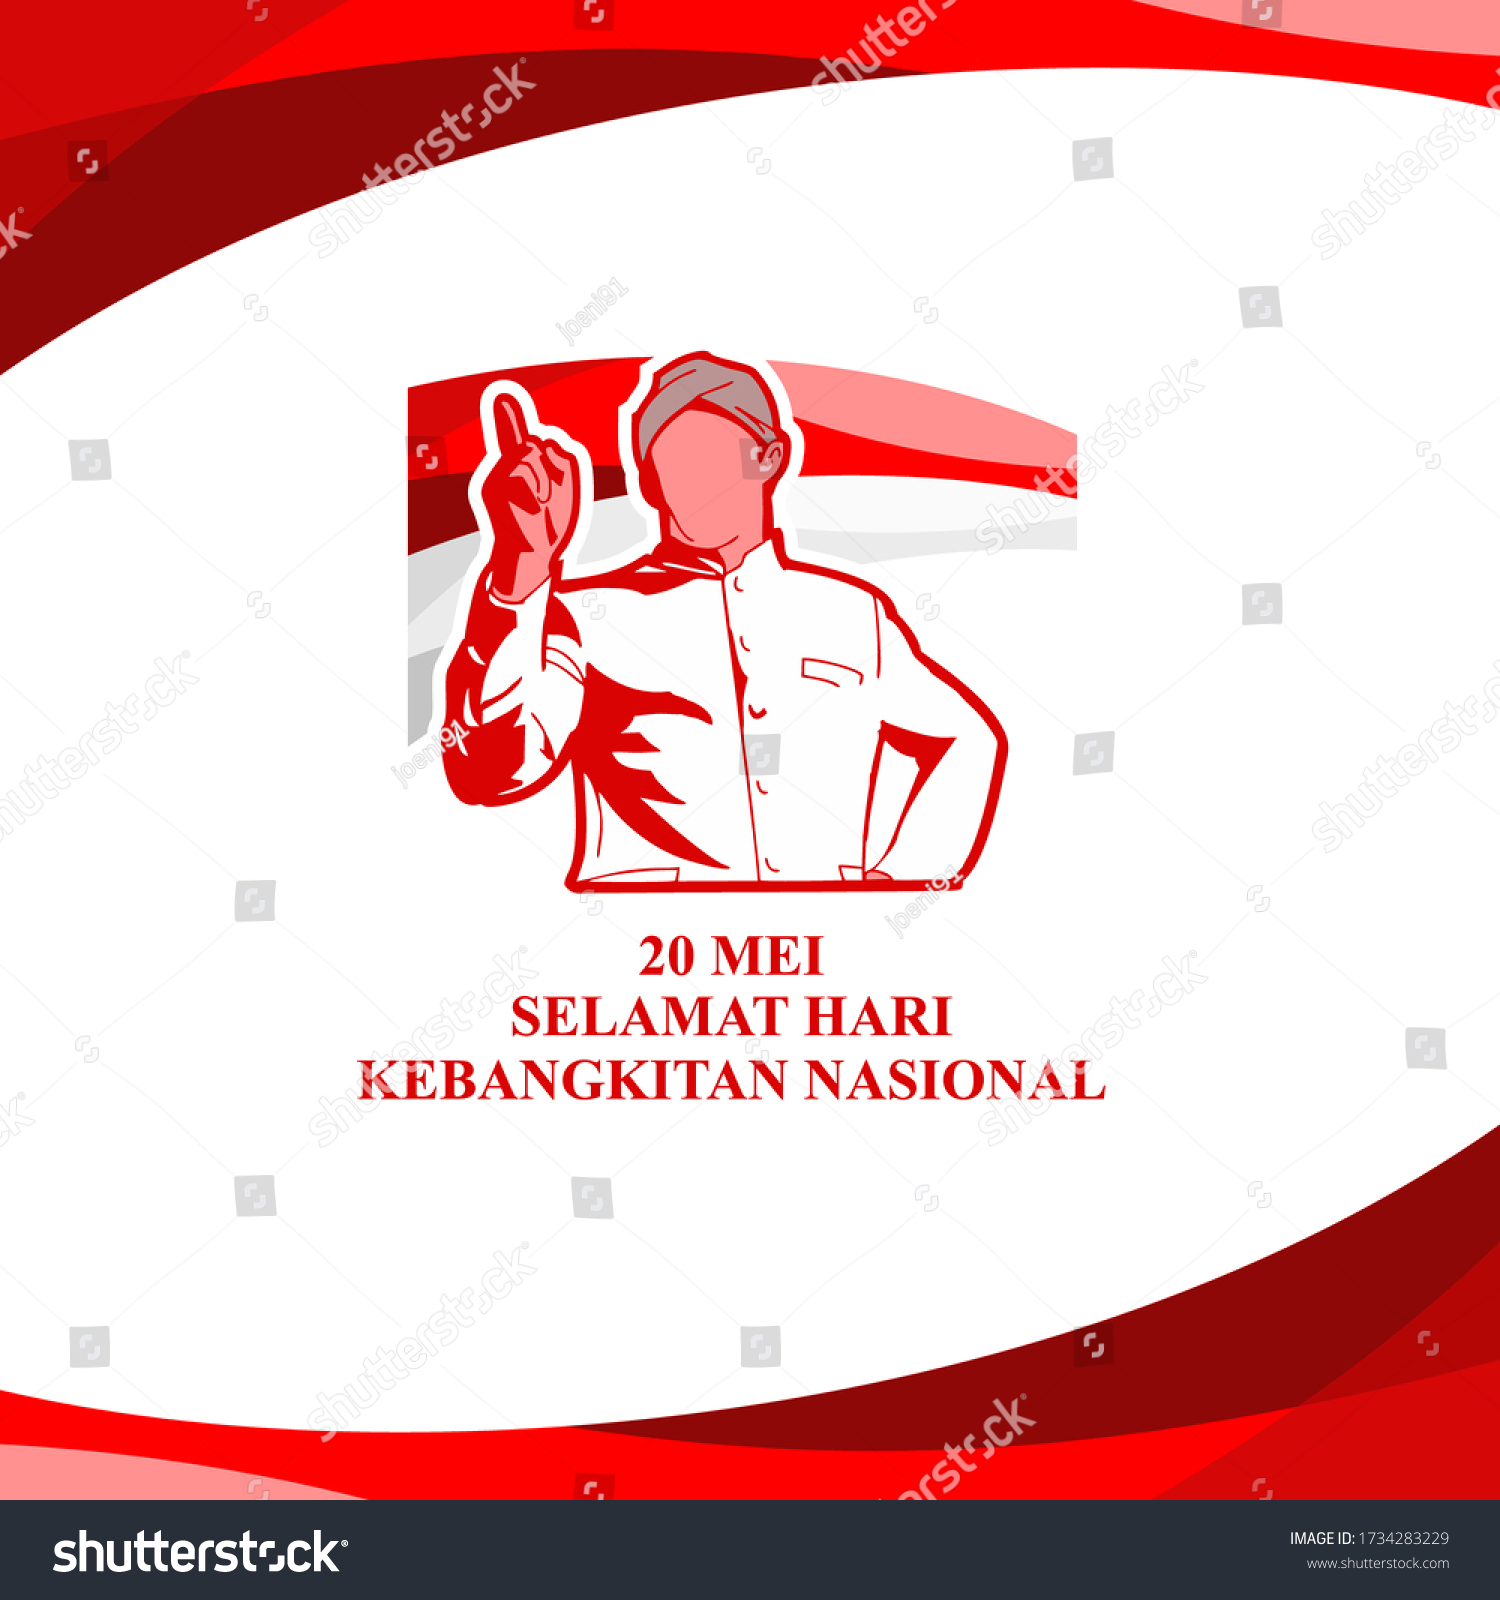 SVG of 20 Mei, Selamat Hari Kebangkitan Nasional (Translation: May 20, National Awakening Day) vector illustration. Suitable for greeting card, poster and banner.  svg